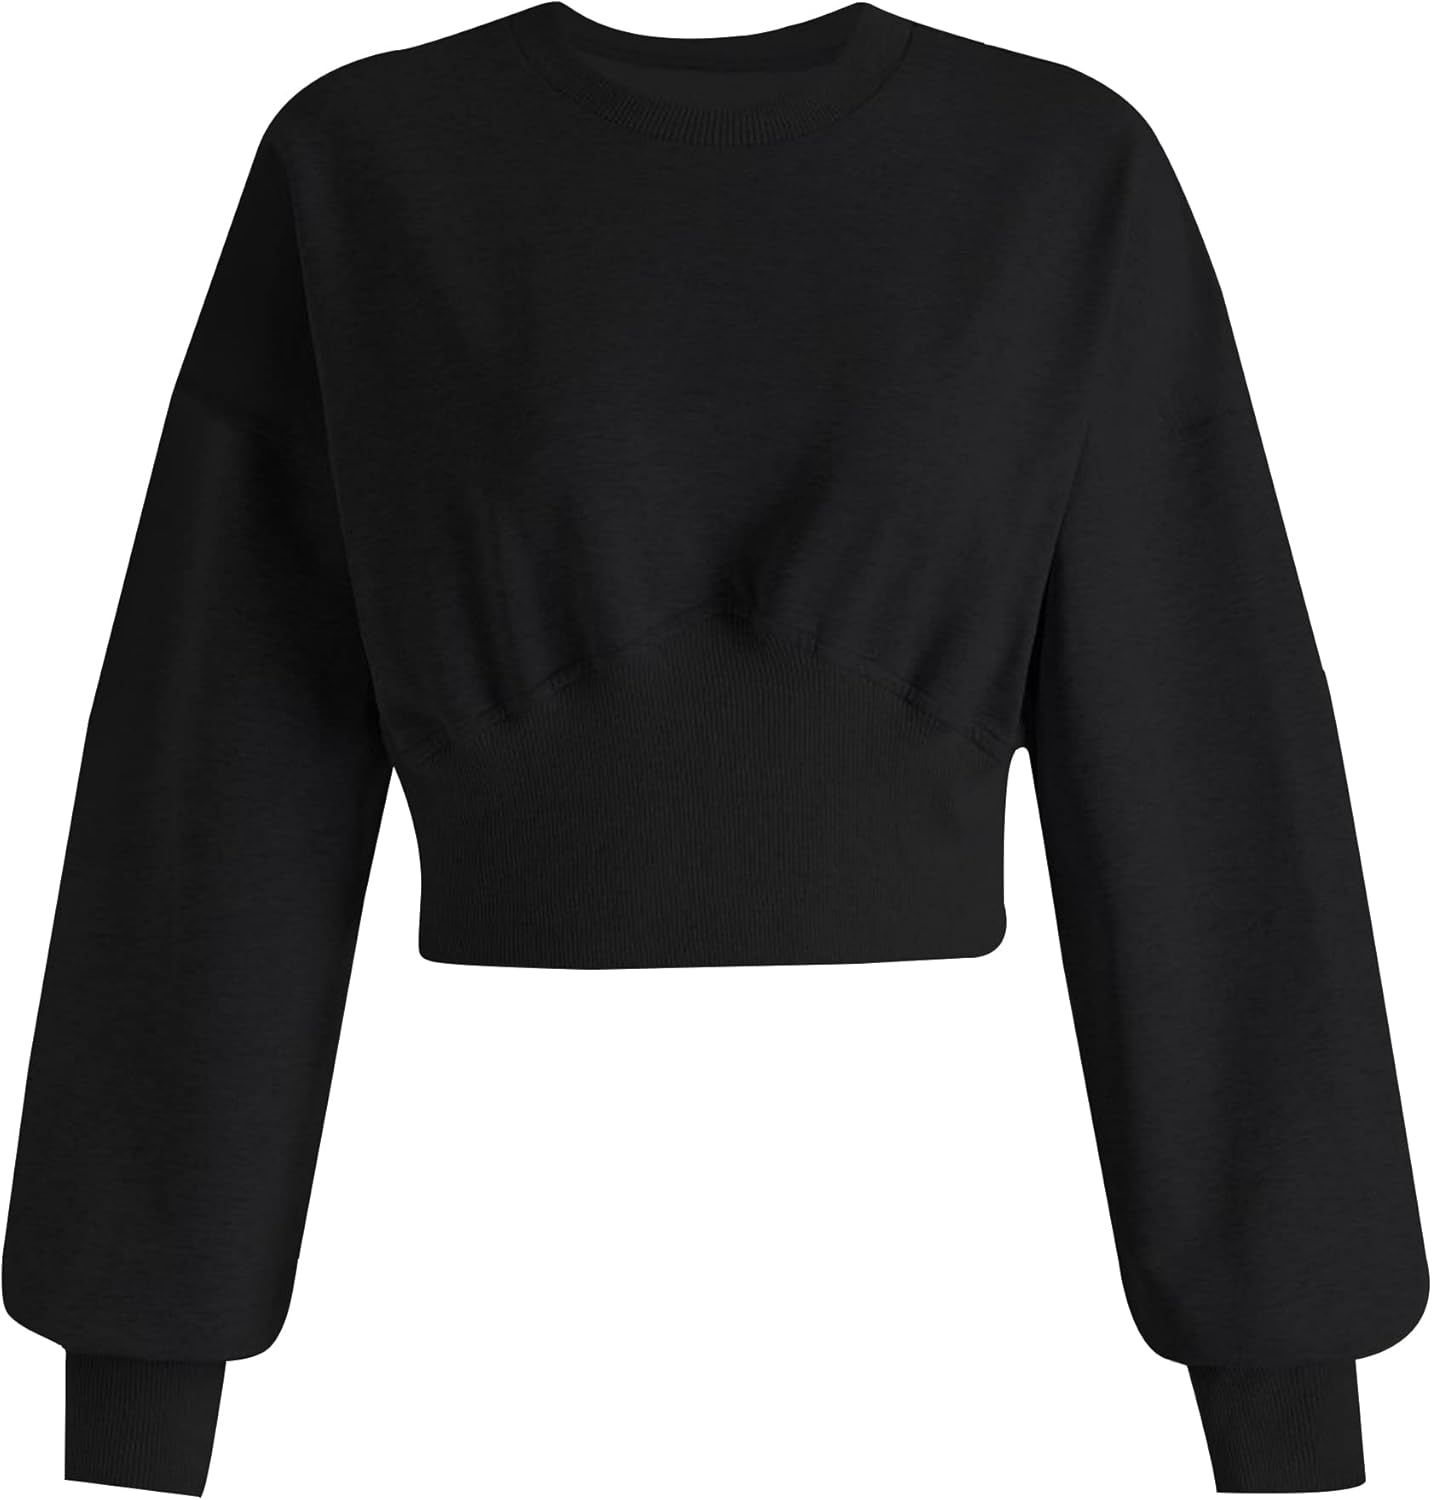 MISSACTIVER Women Casual Crewneck Crop Sweatshirt Solid Long Sleeve Drop Shoulder Pullovers Ribbe... | Amazon (US)